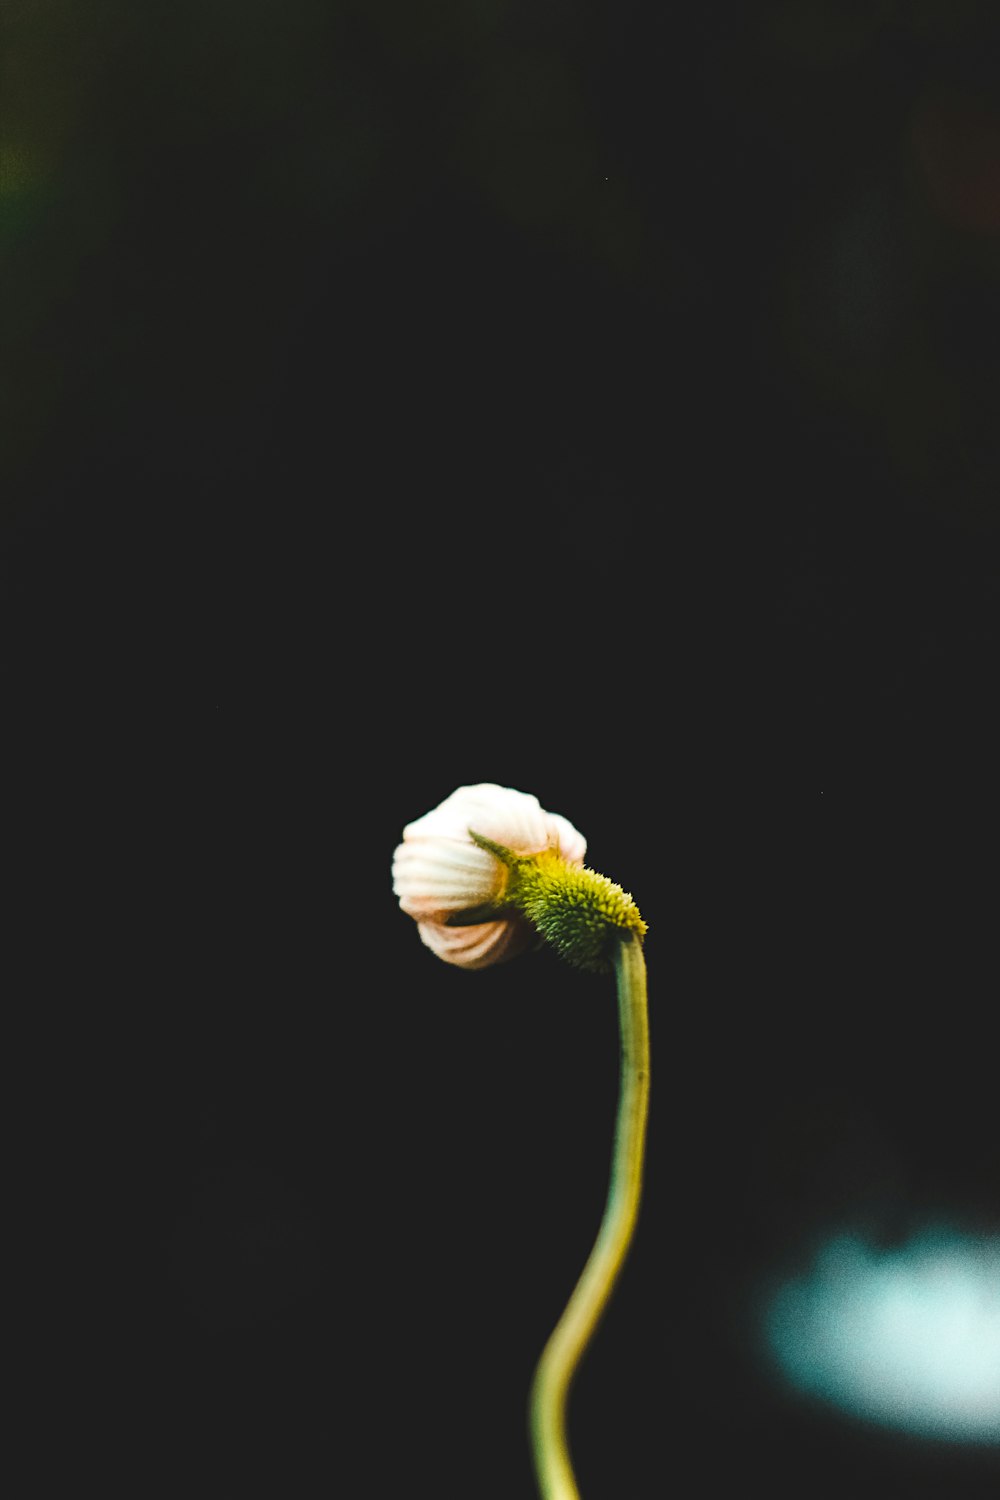 fleur blanche avec tige verte